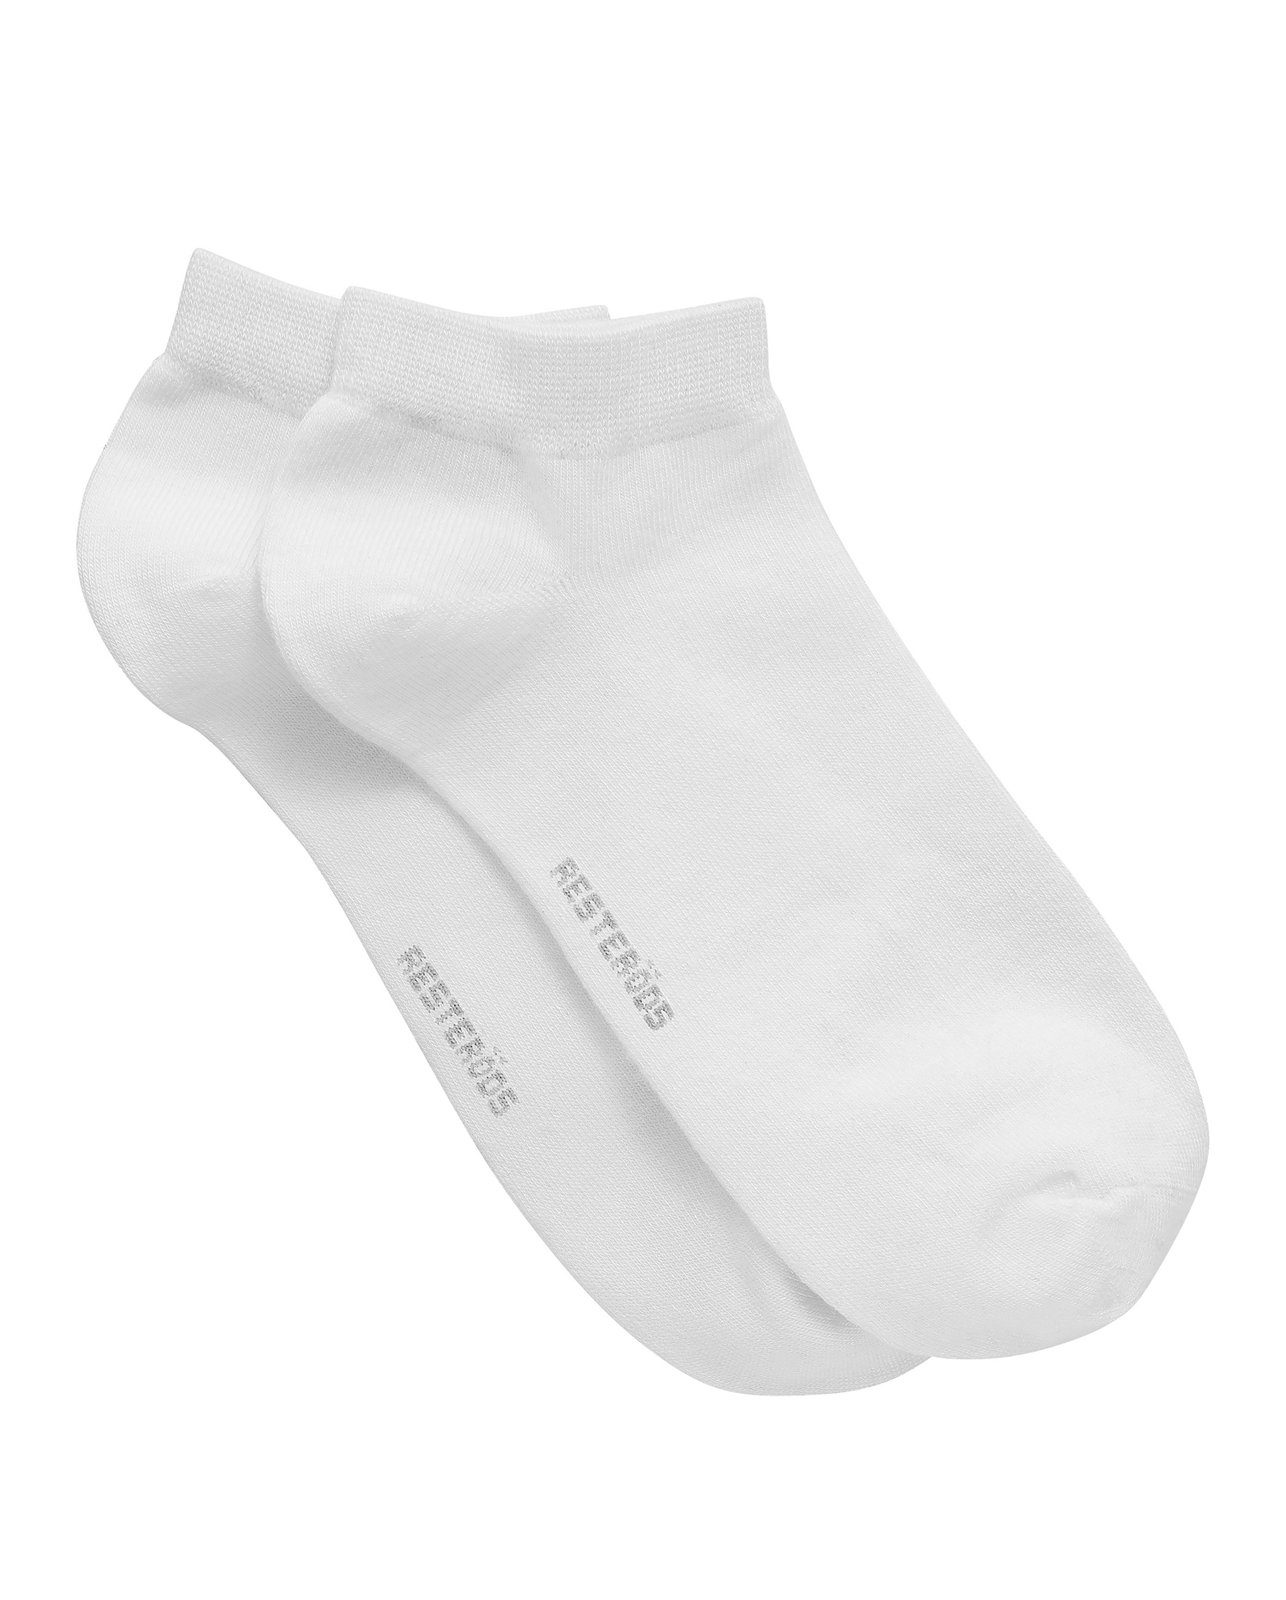 Resteröds Sneakersocken 5er Pack Bamboo Sneaker Socks (Vorteilspack, 5 Paar) Weiß